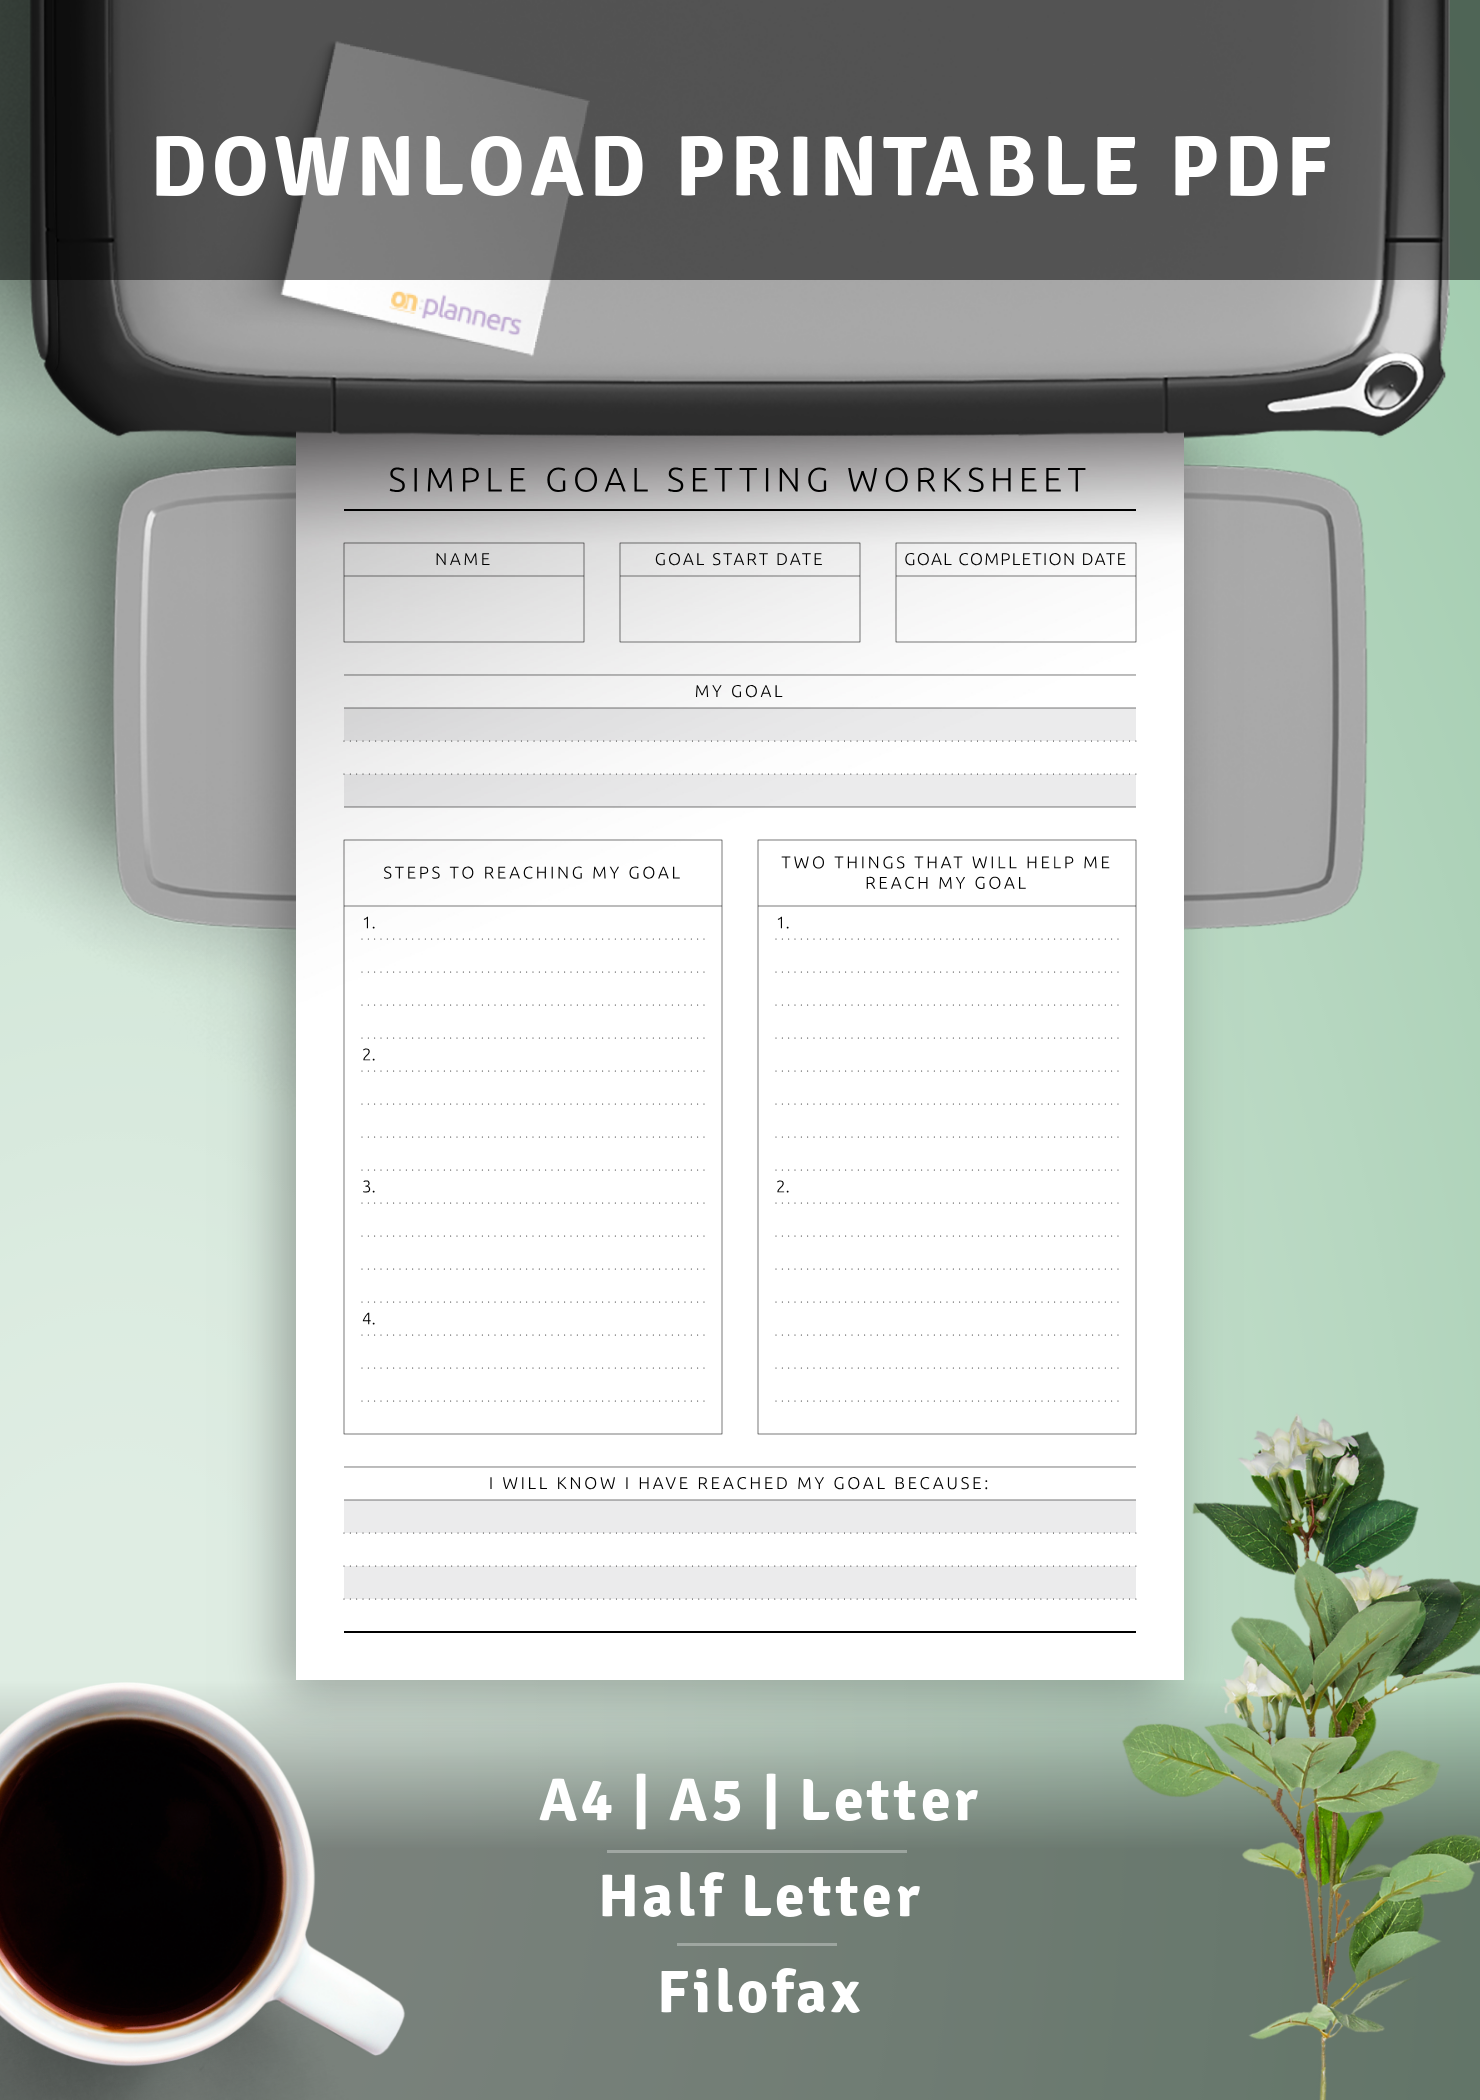 Download Printable Simple Goal Setting Worksheet - Original Style PDF